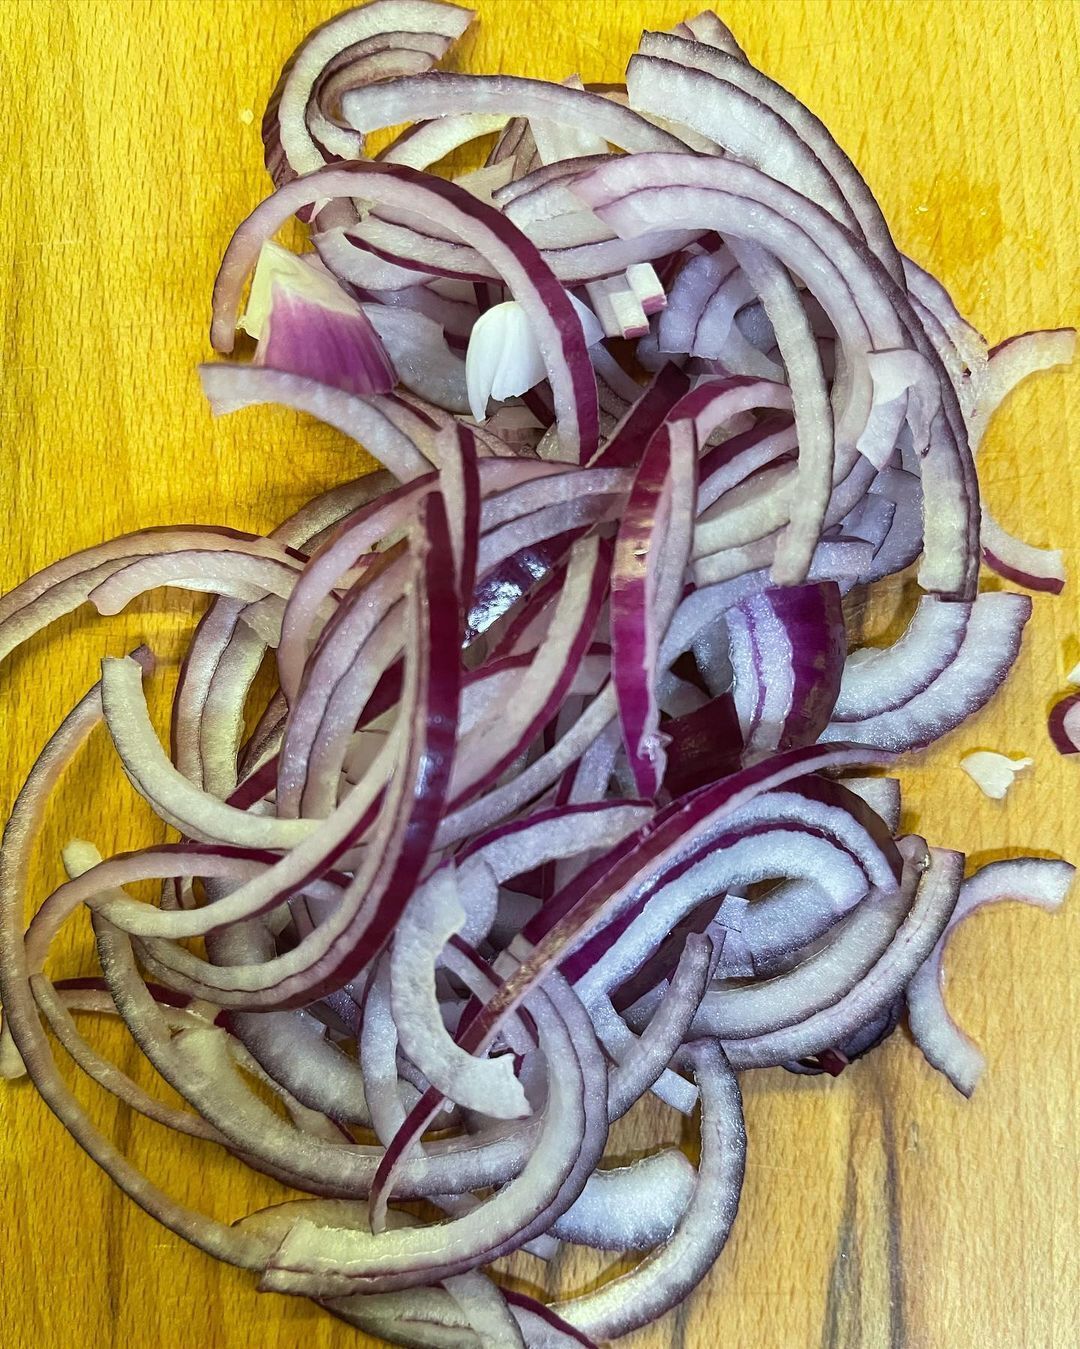 Onions for salad preparation